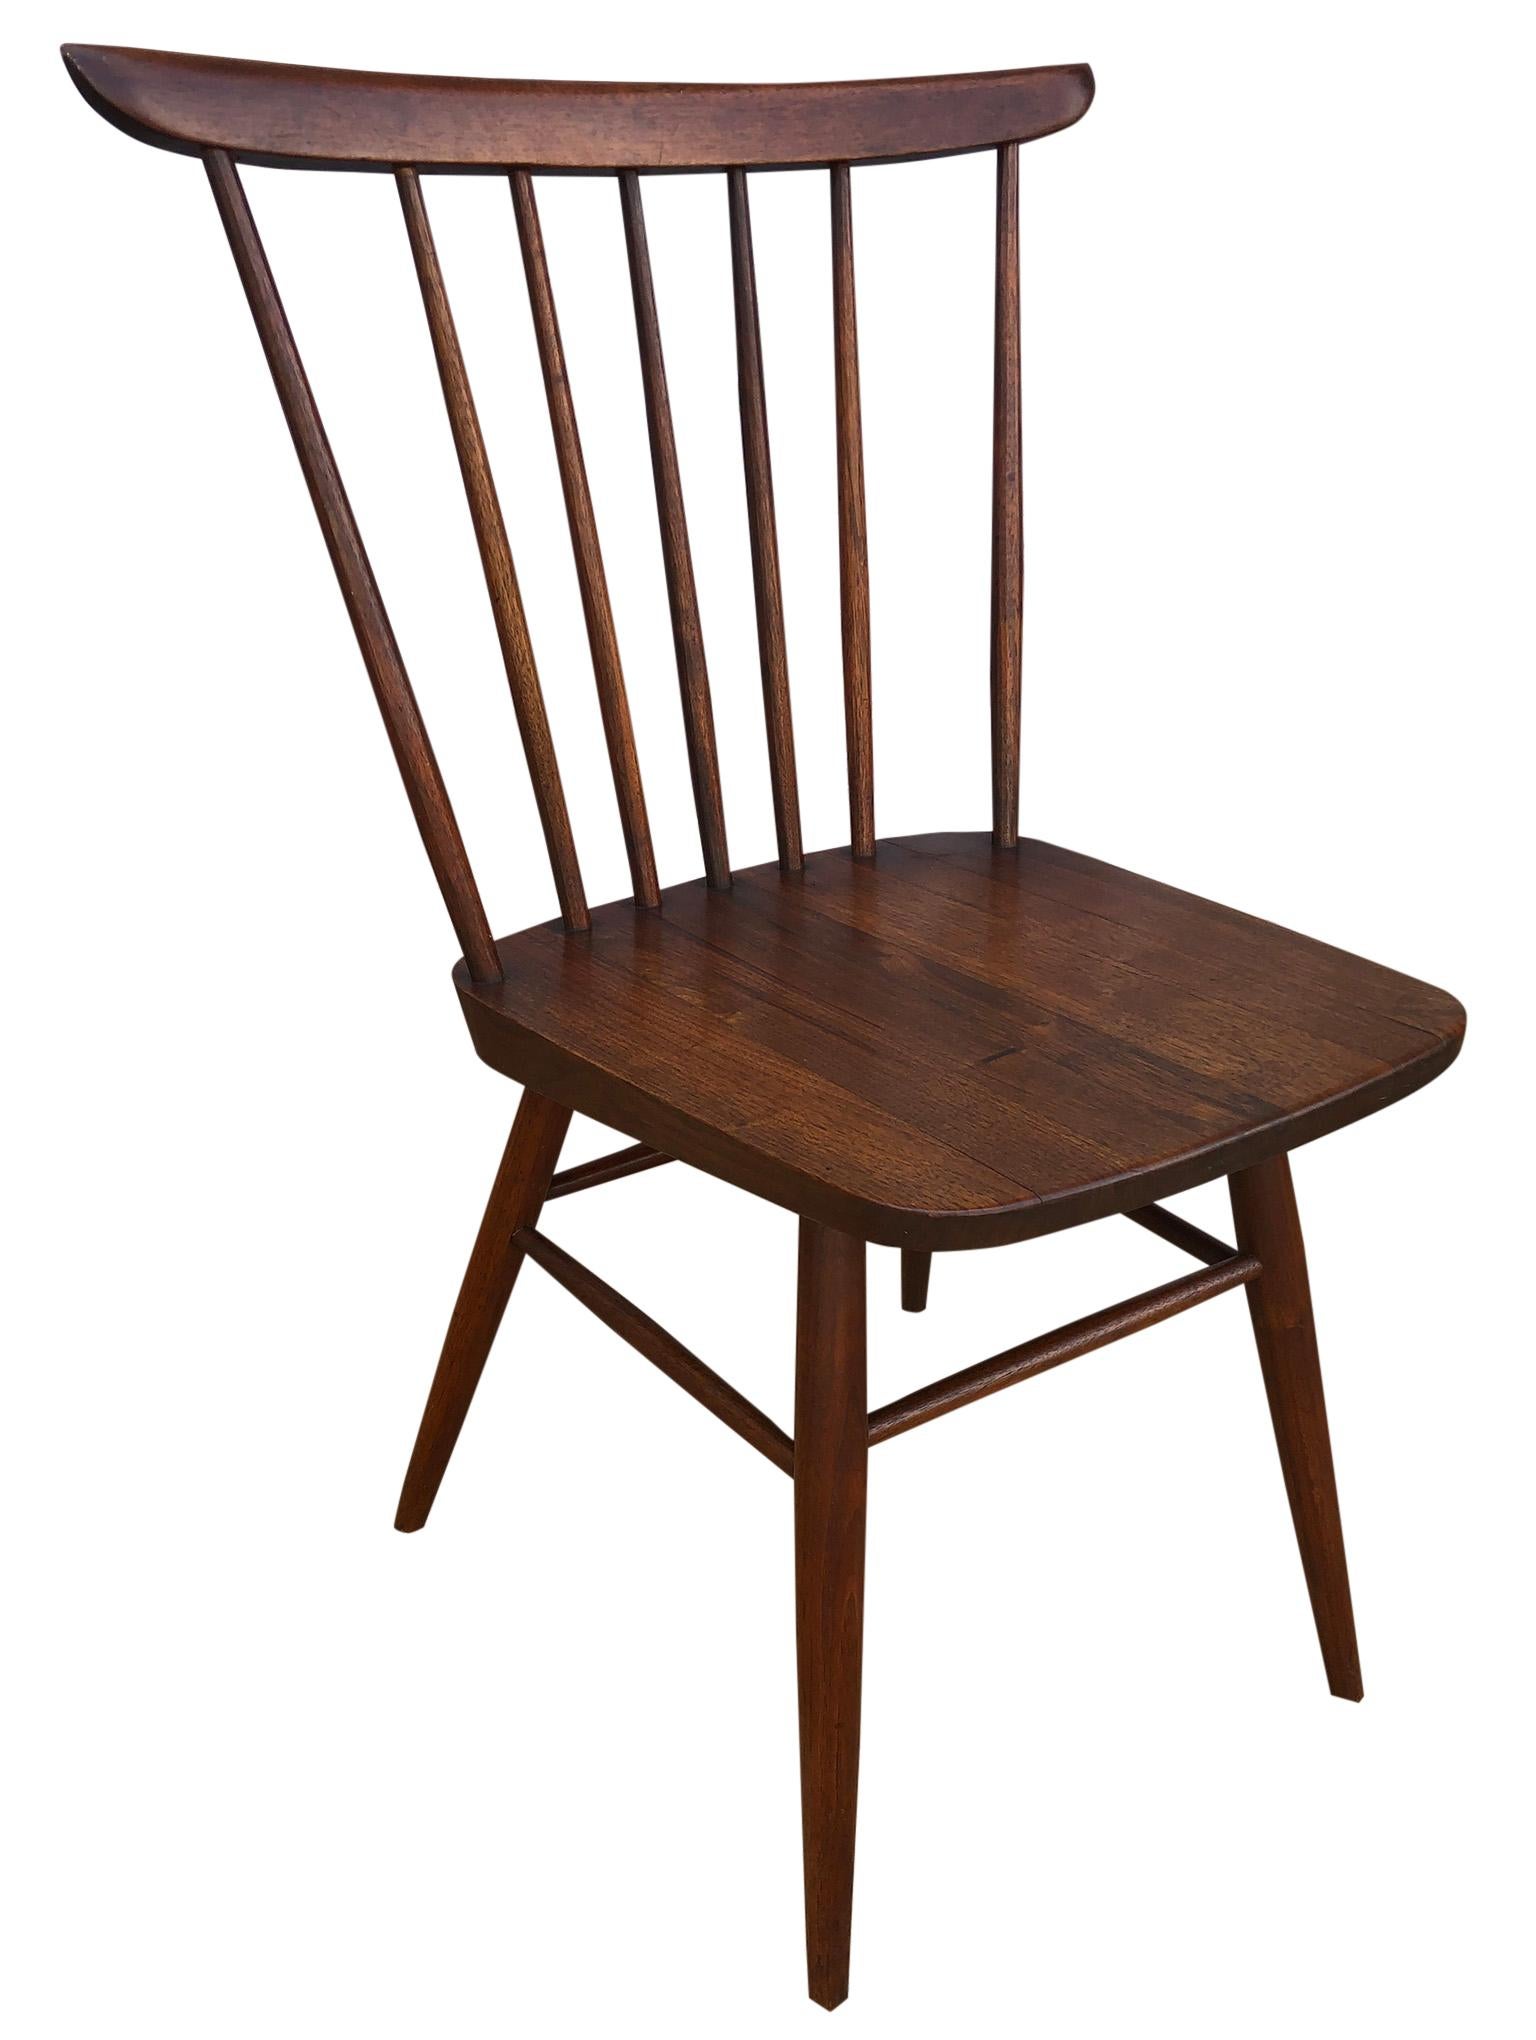 20th Century American Studio Craft Solid Walnut Dining Chairs Style of Nakashima